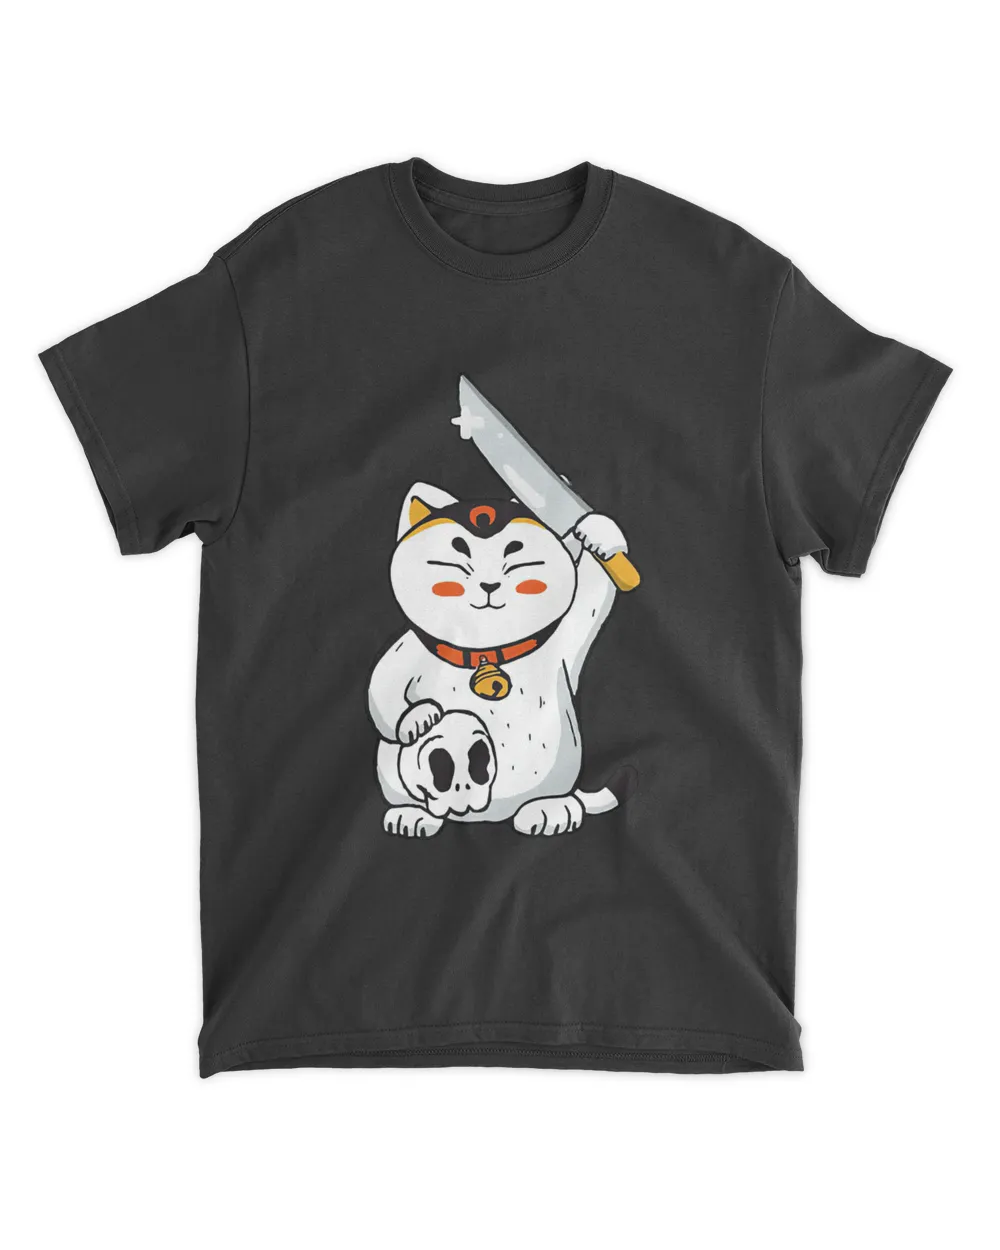 Maneki-neko Cat With Knife Shirt